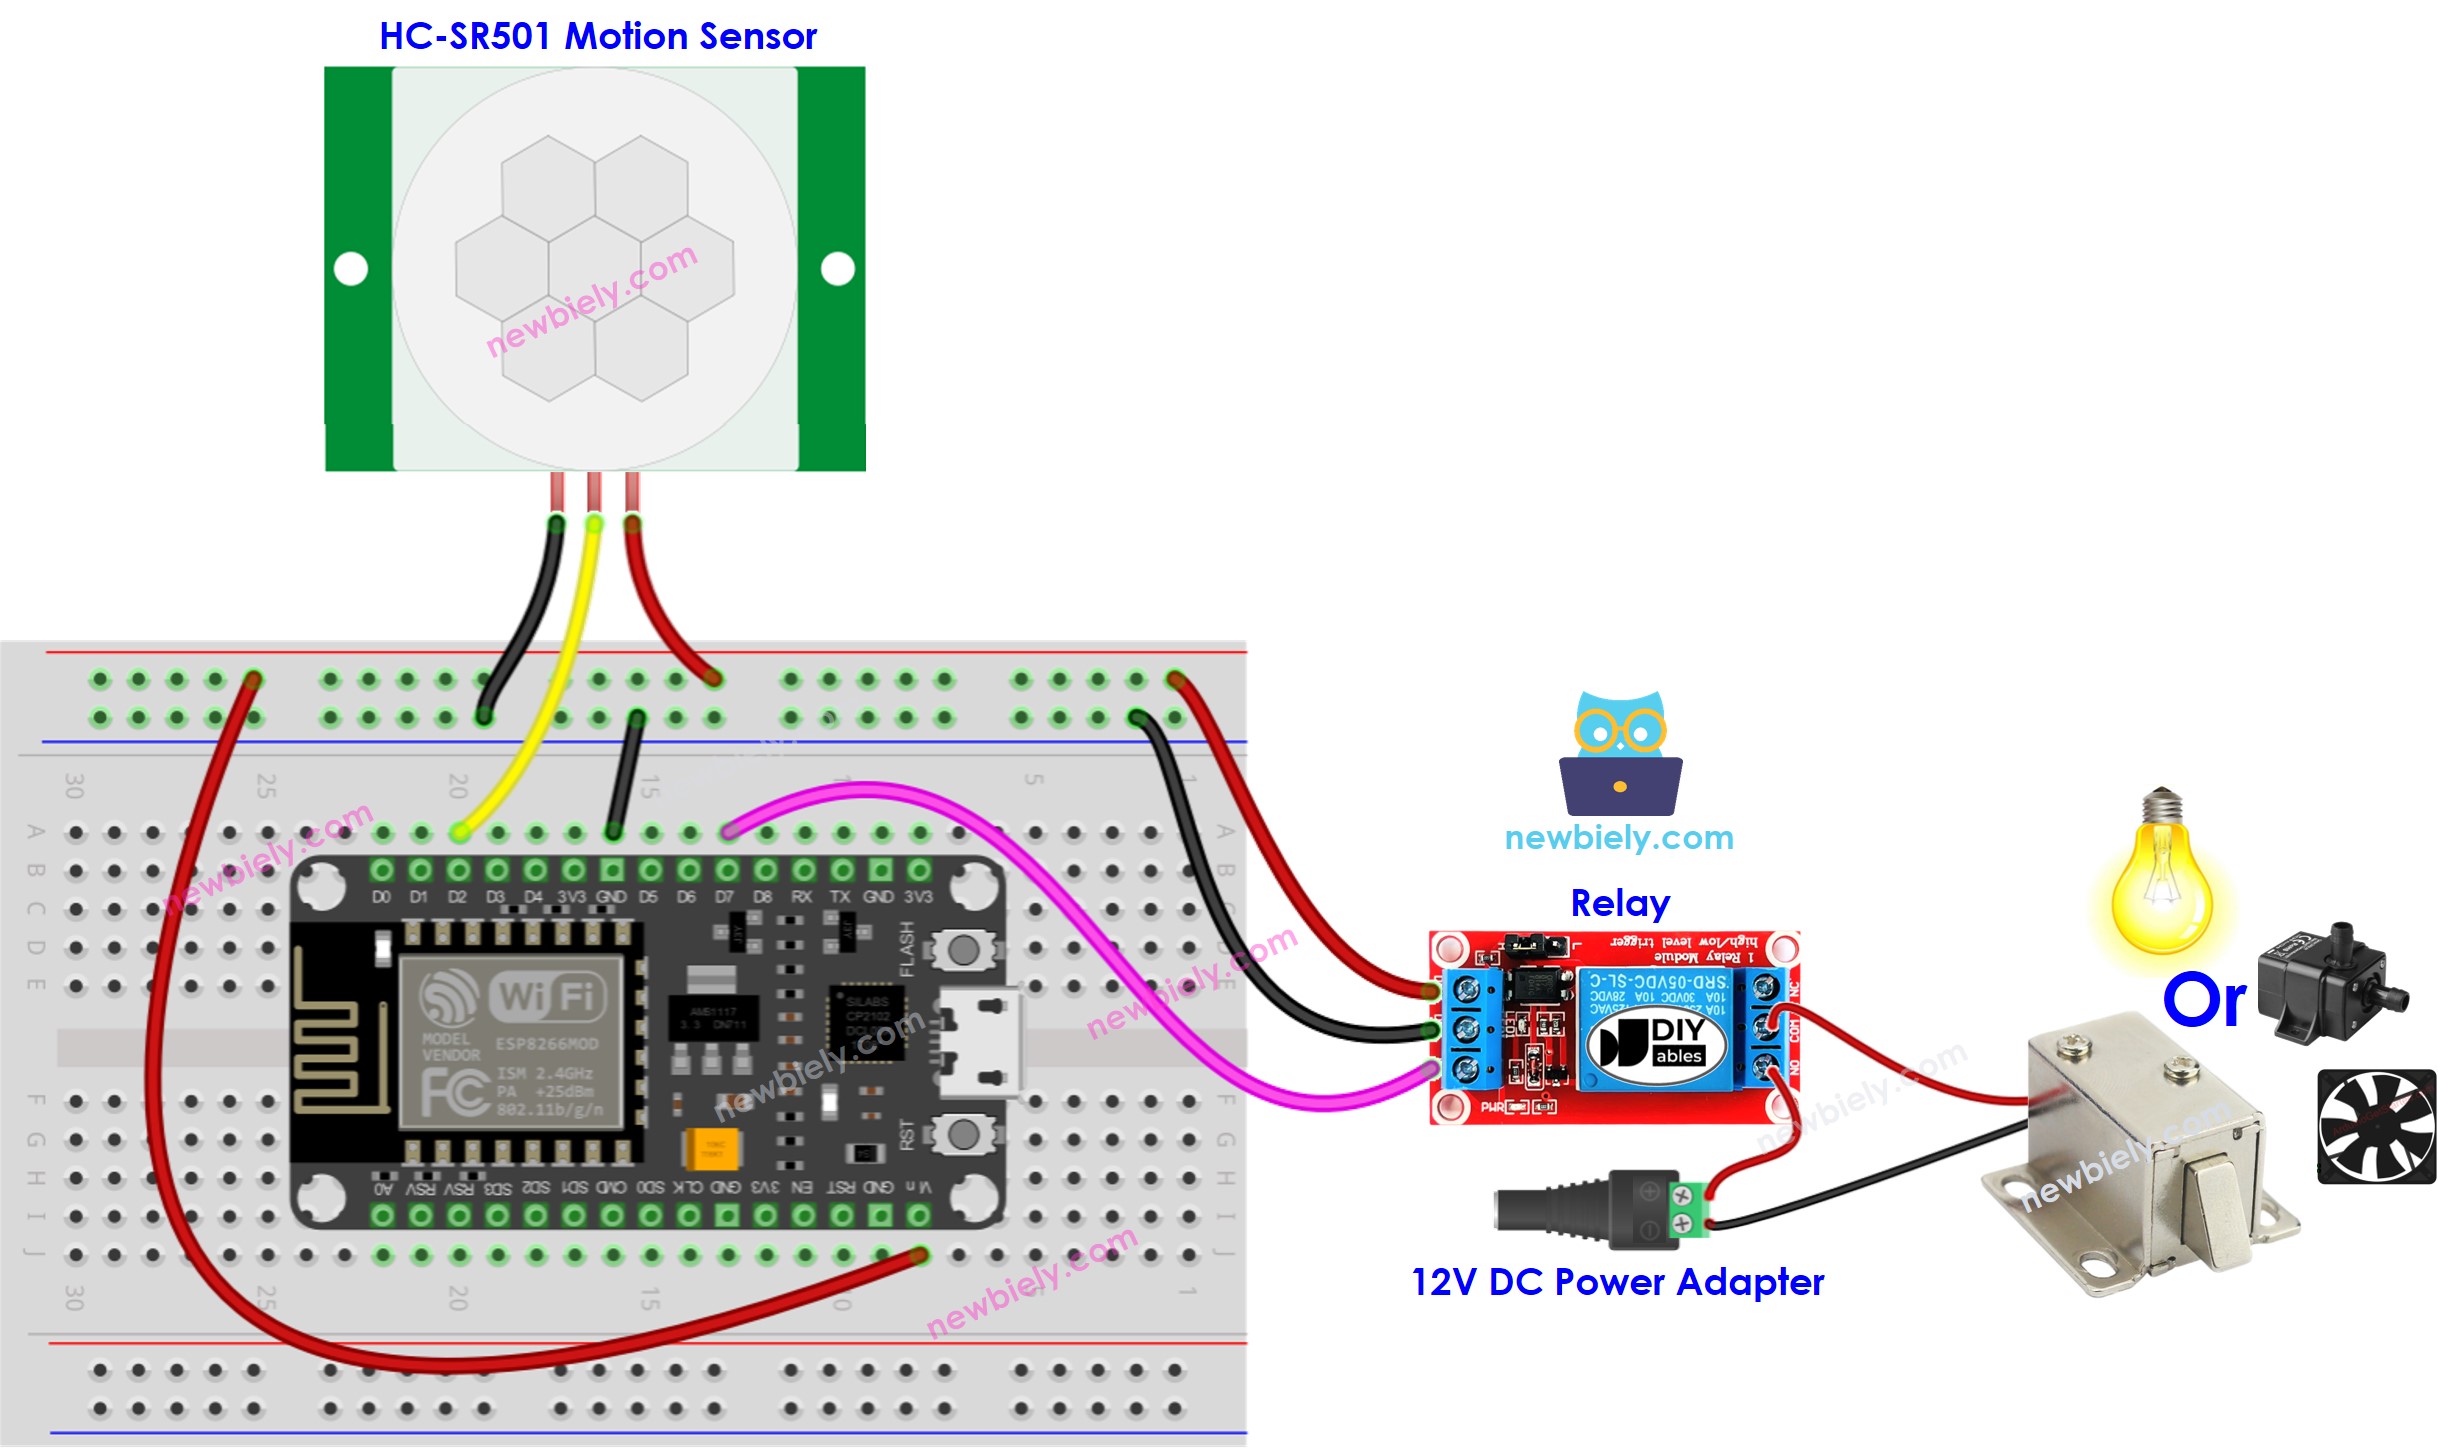 The wiring diagram between ESP8266 NodeMCU and Motion Sensor Relay